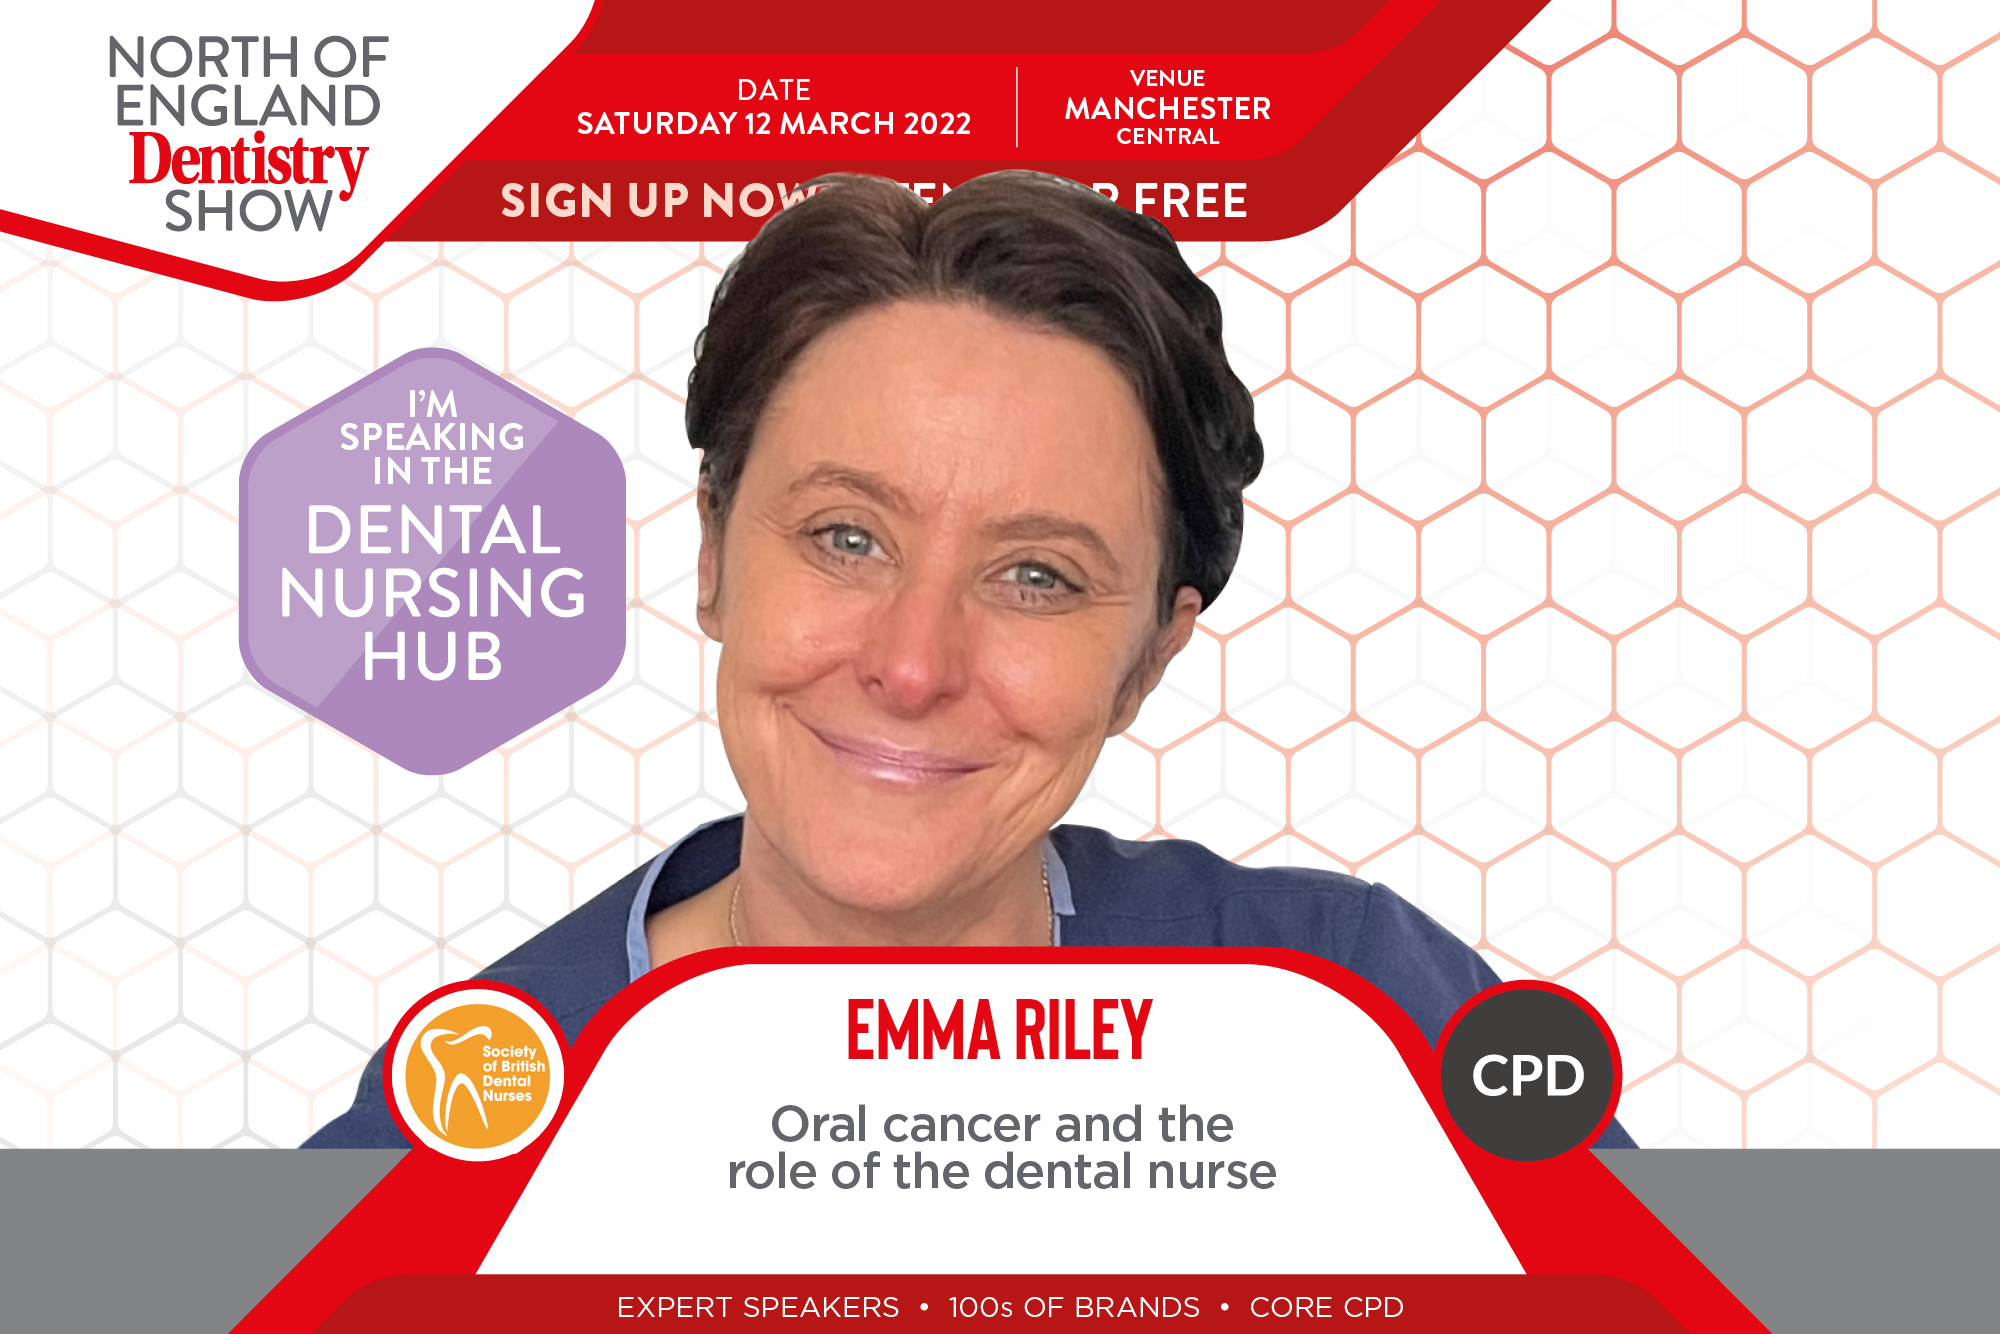 North of England Dentistry Show – Emma Riley